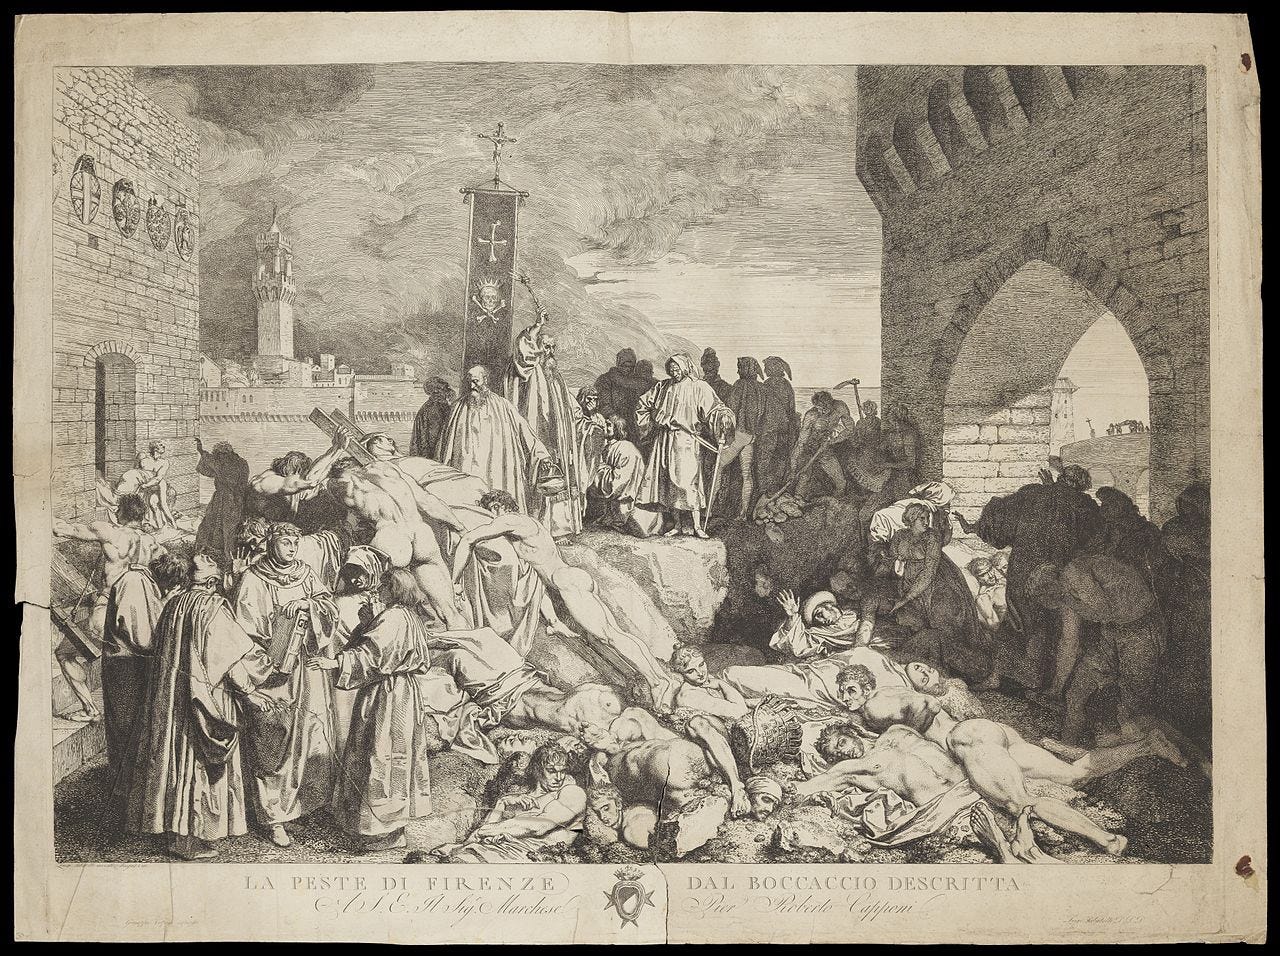 La Pestilenza: The Black Death in Italy - The History Buff - Medium